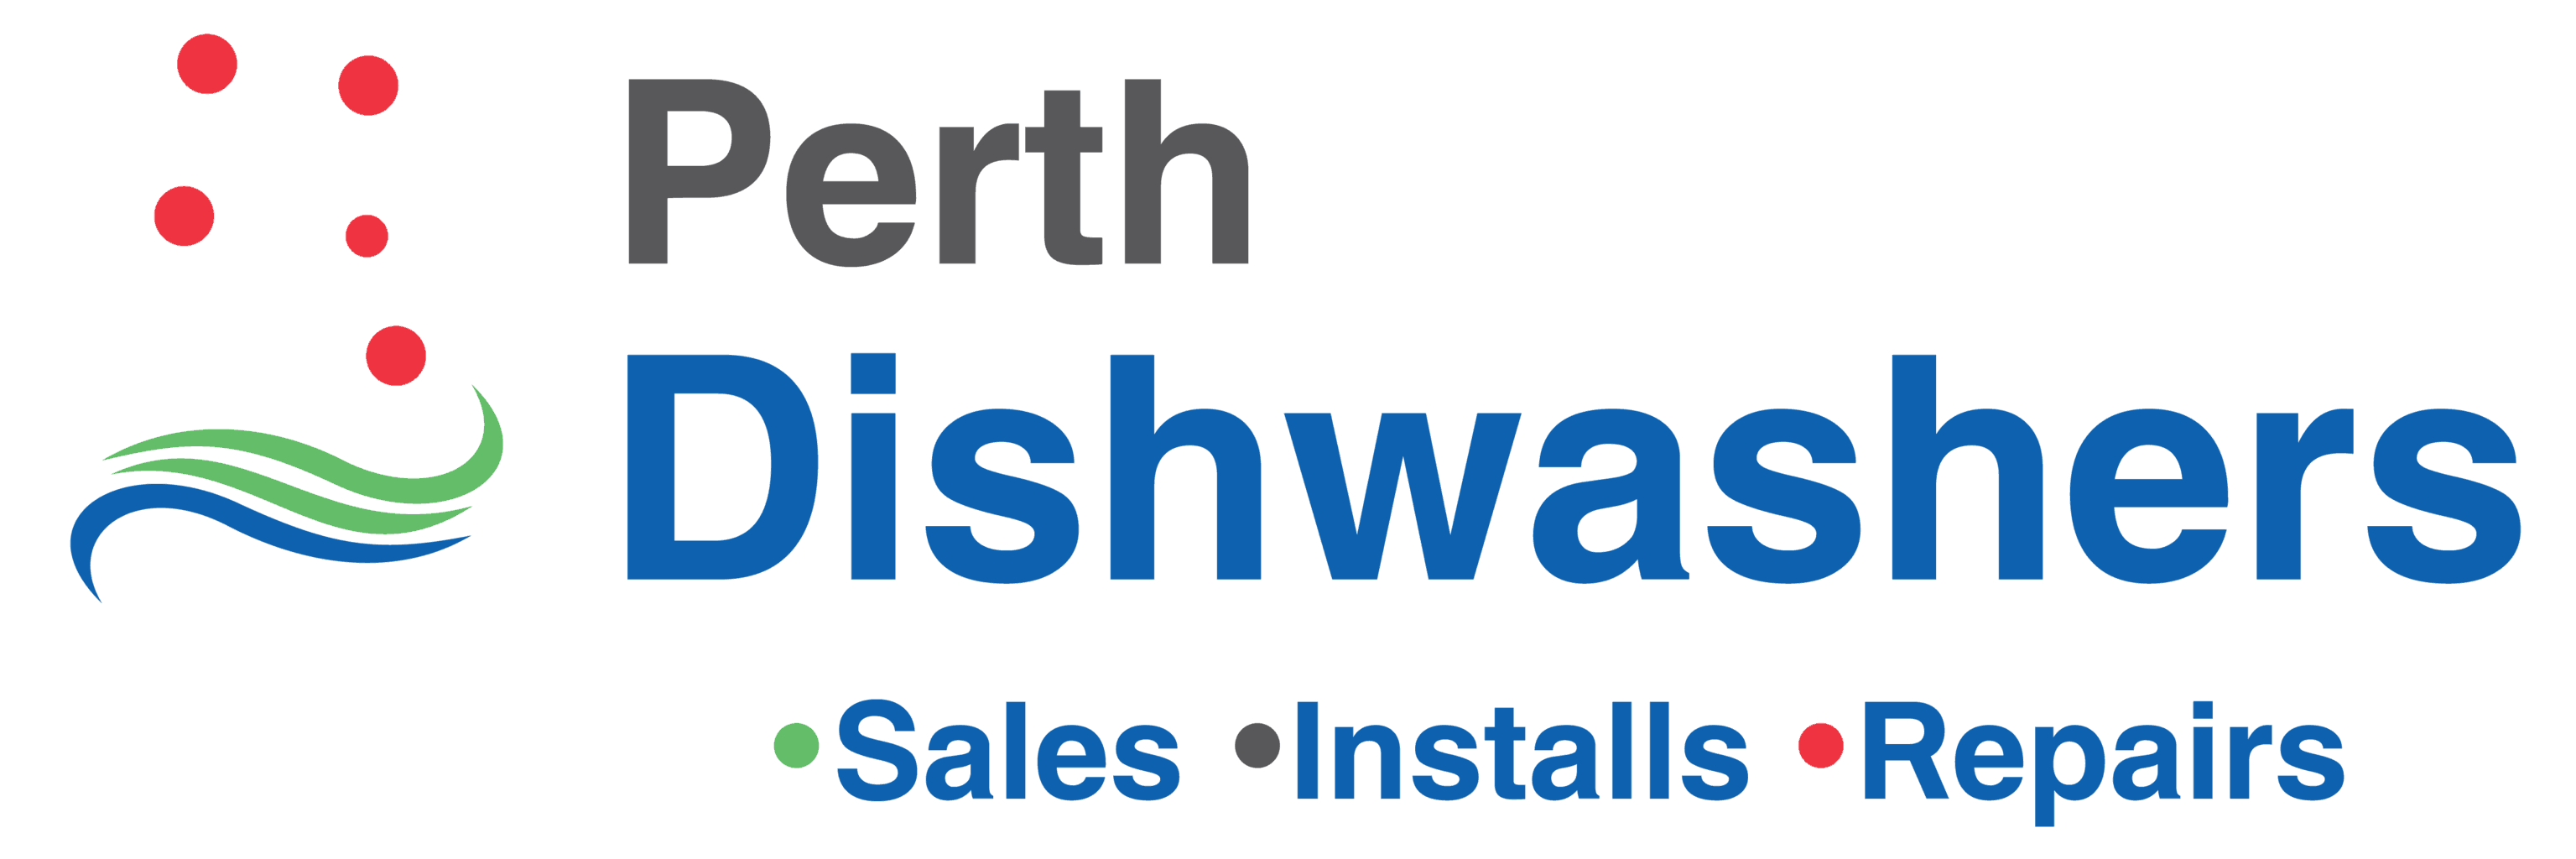 logo-perth-dishwashers.png